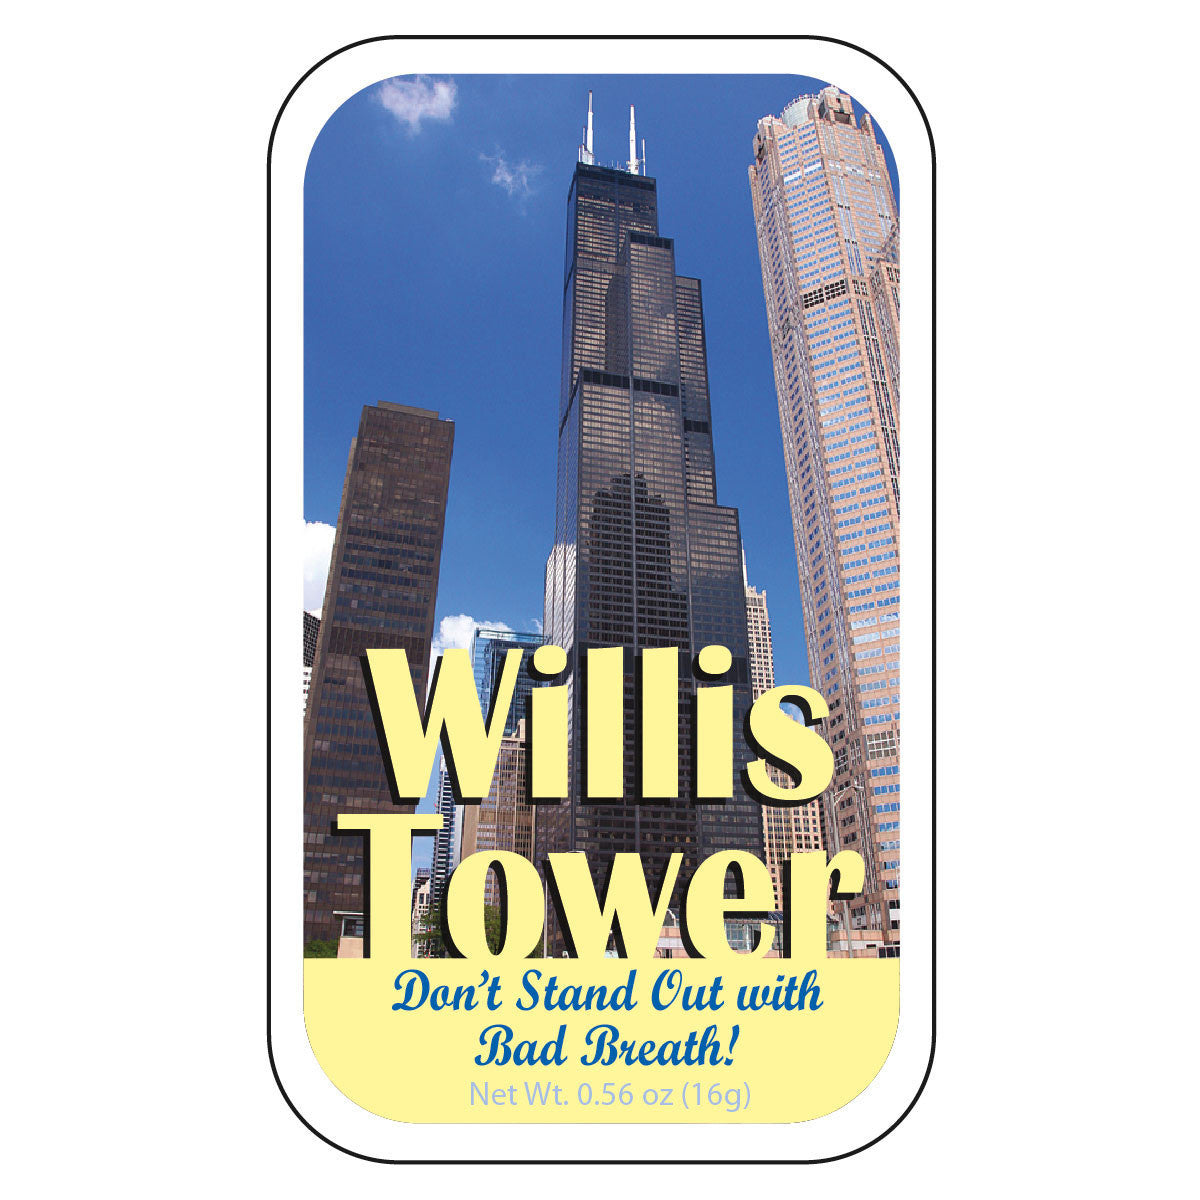 Chicago Willis Tower - 0099S